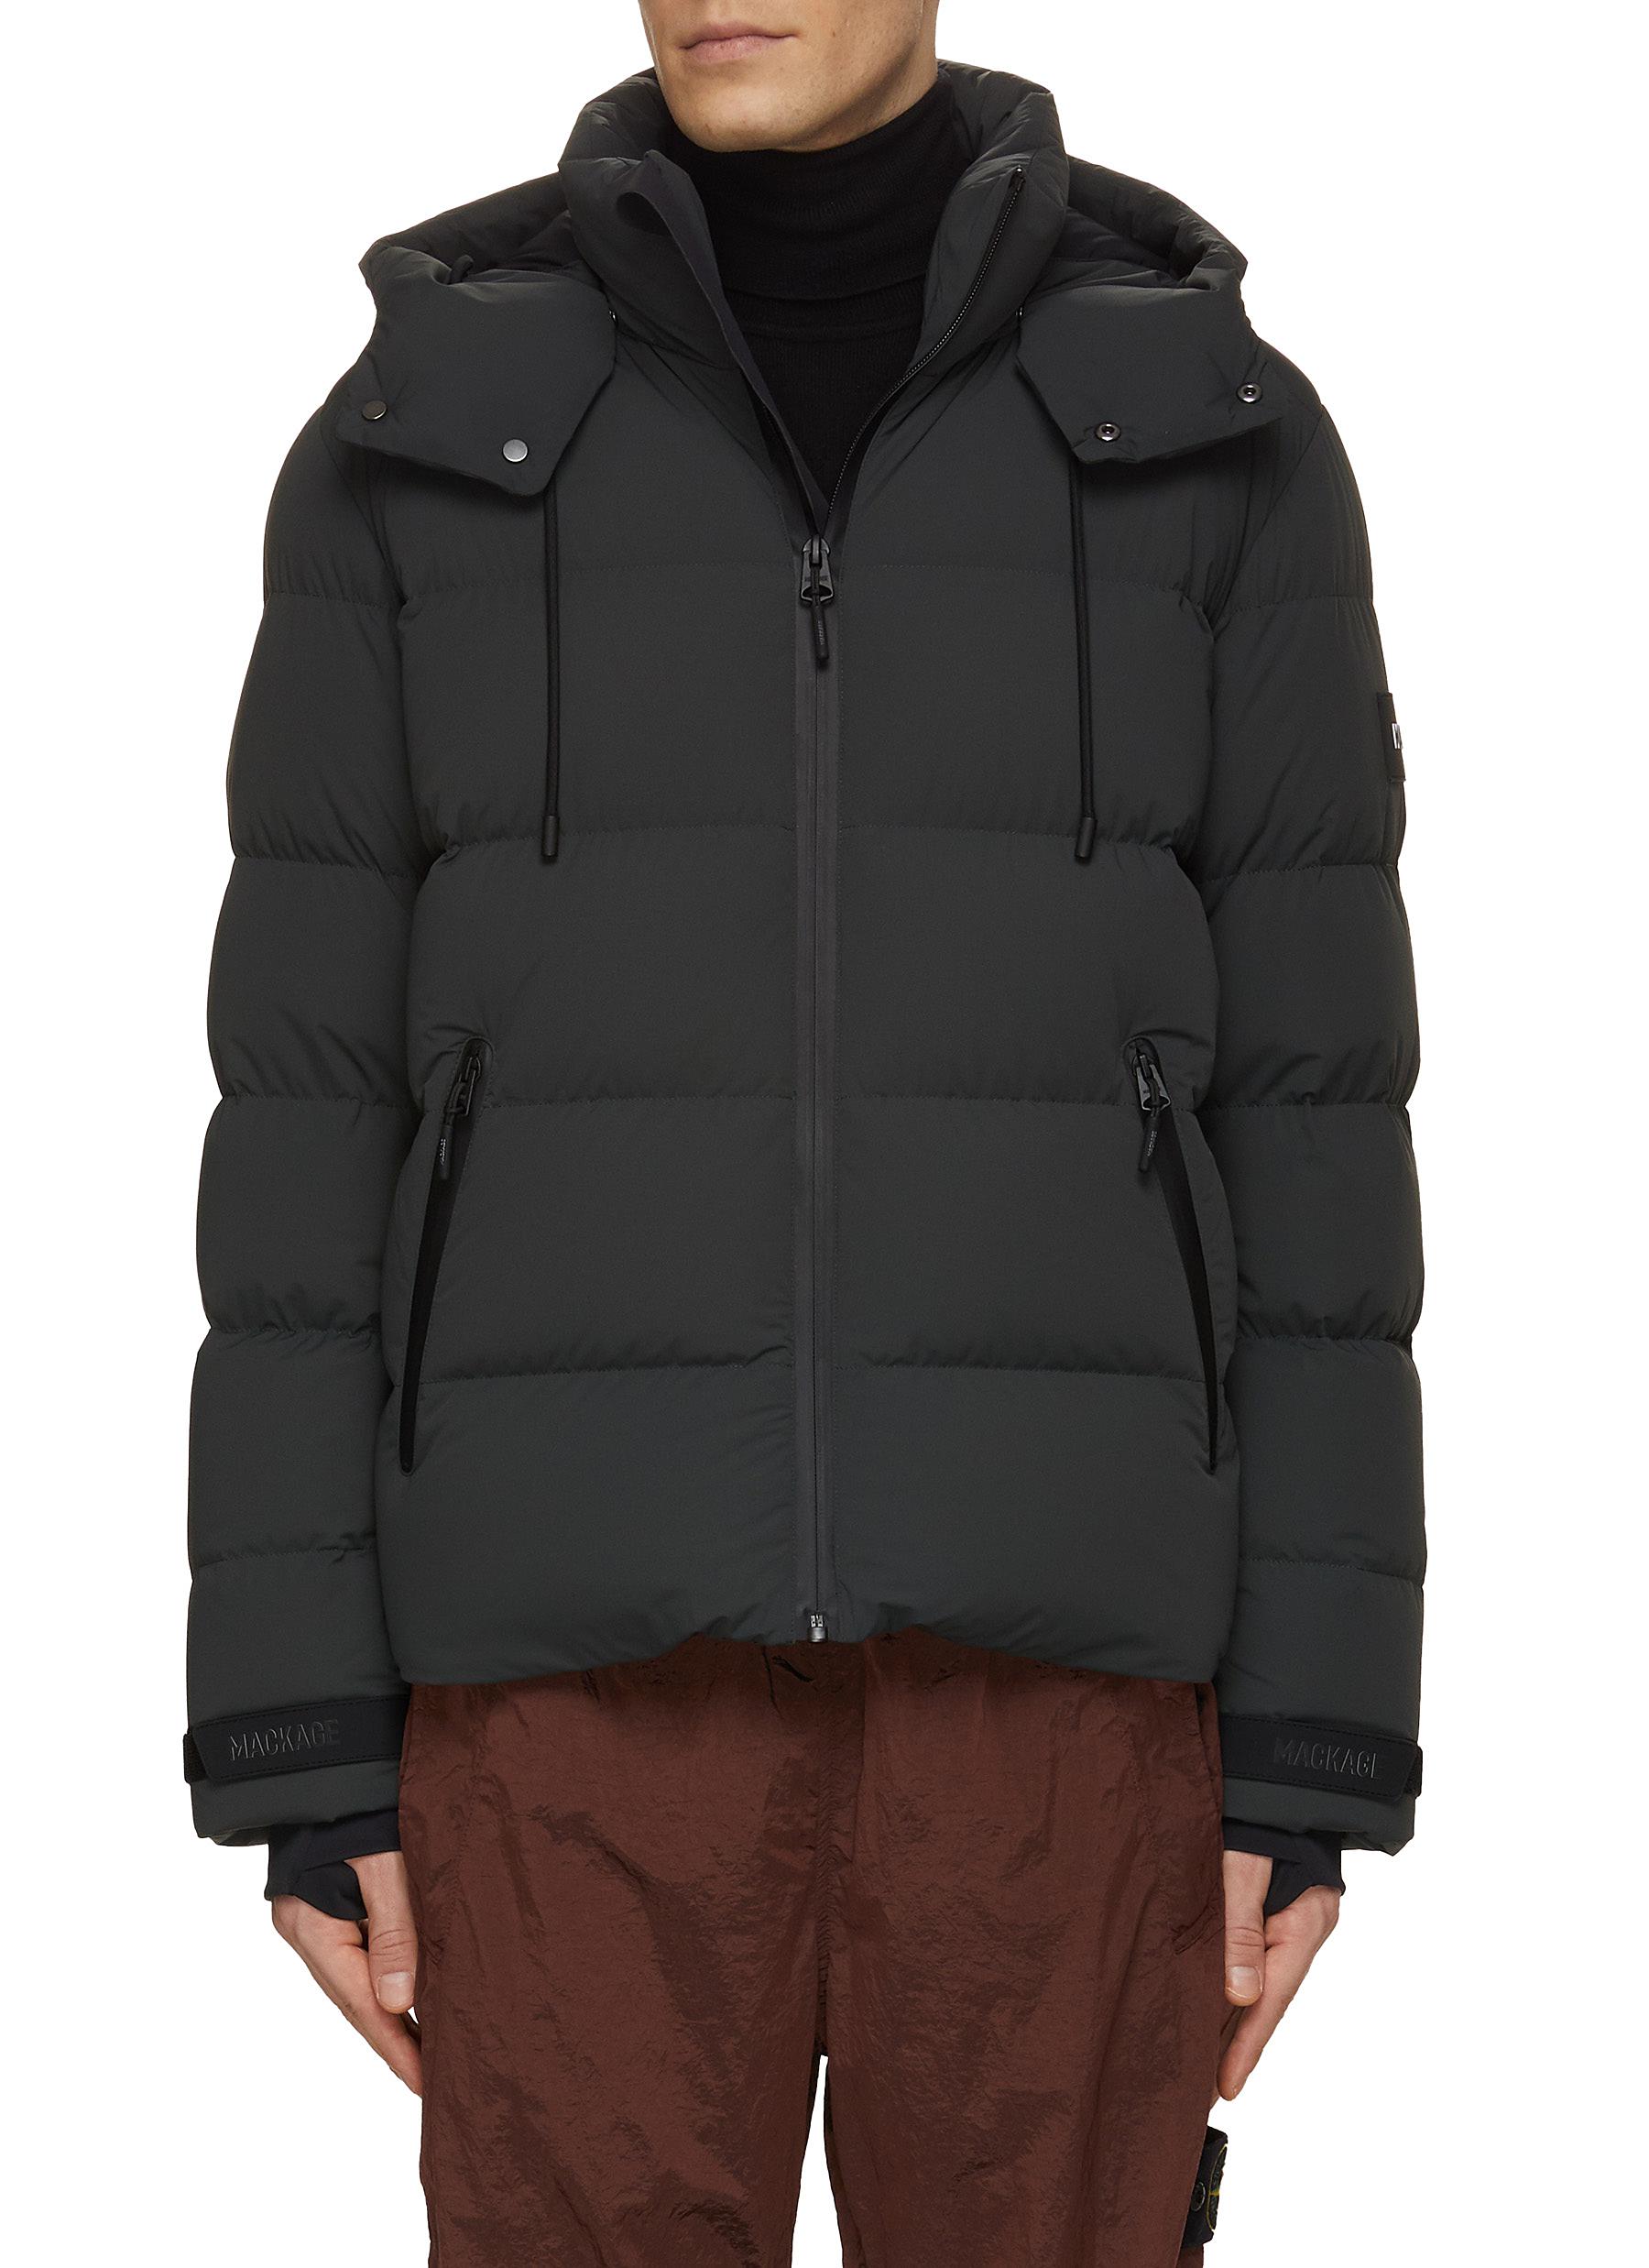 SAMUEL Hooded Reflective Puffer Ski Jacket